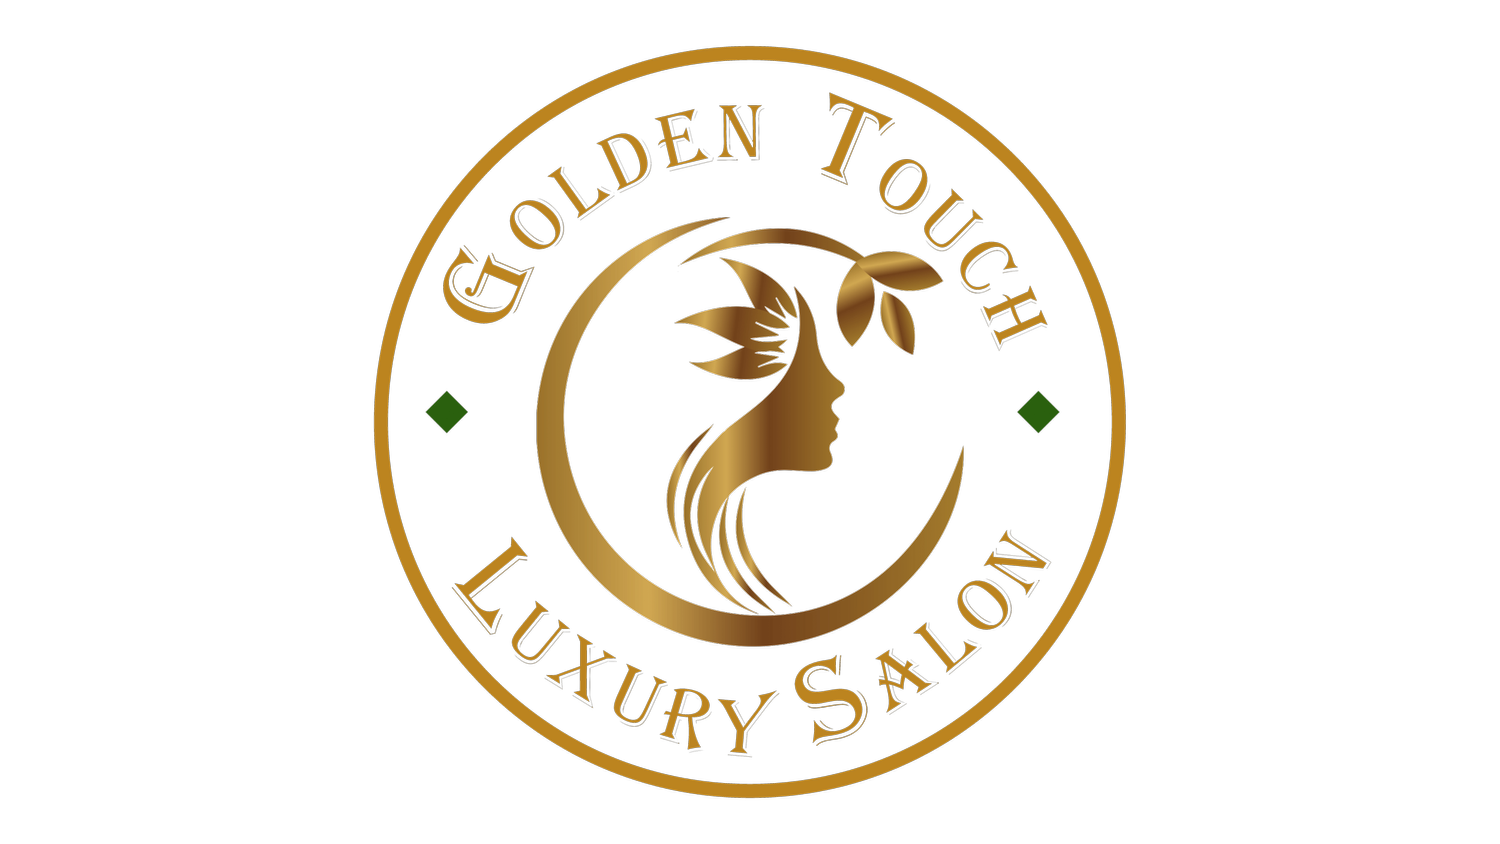 Golden Touch Luxury Salon